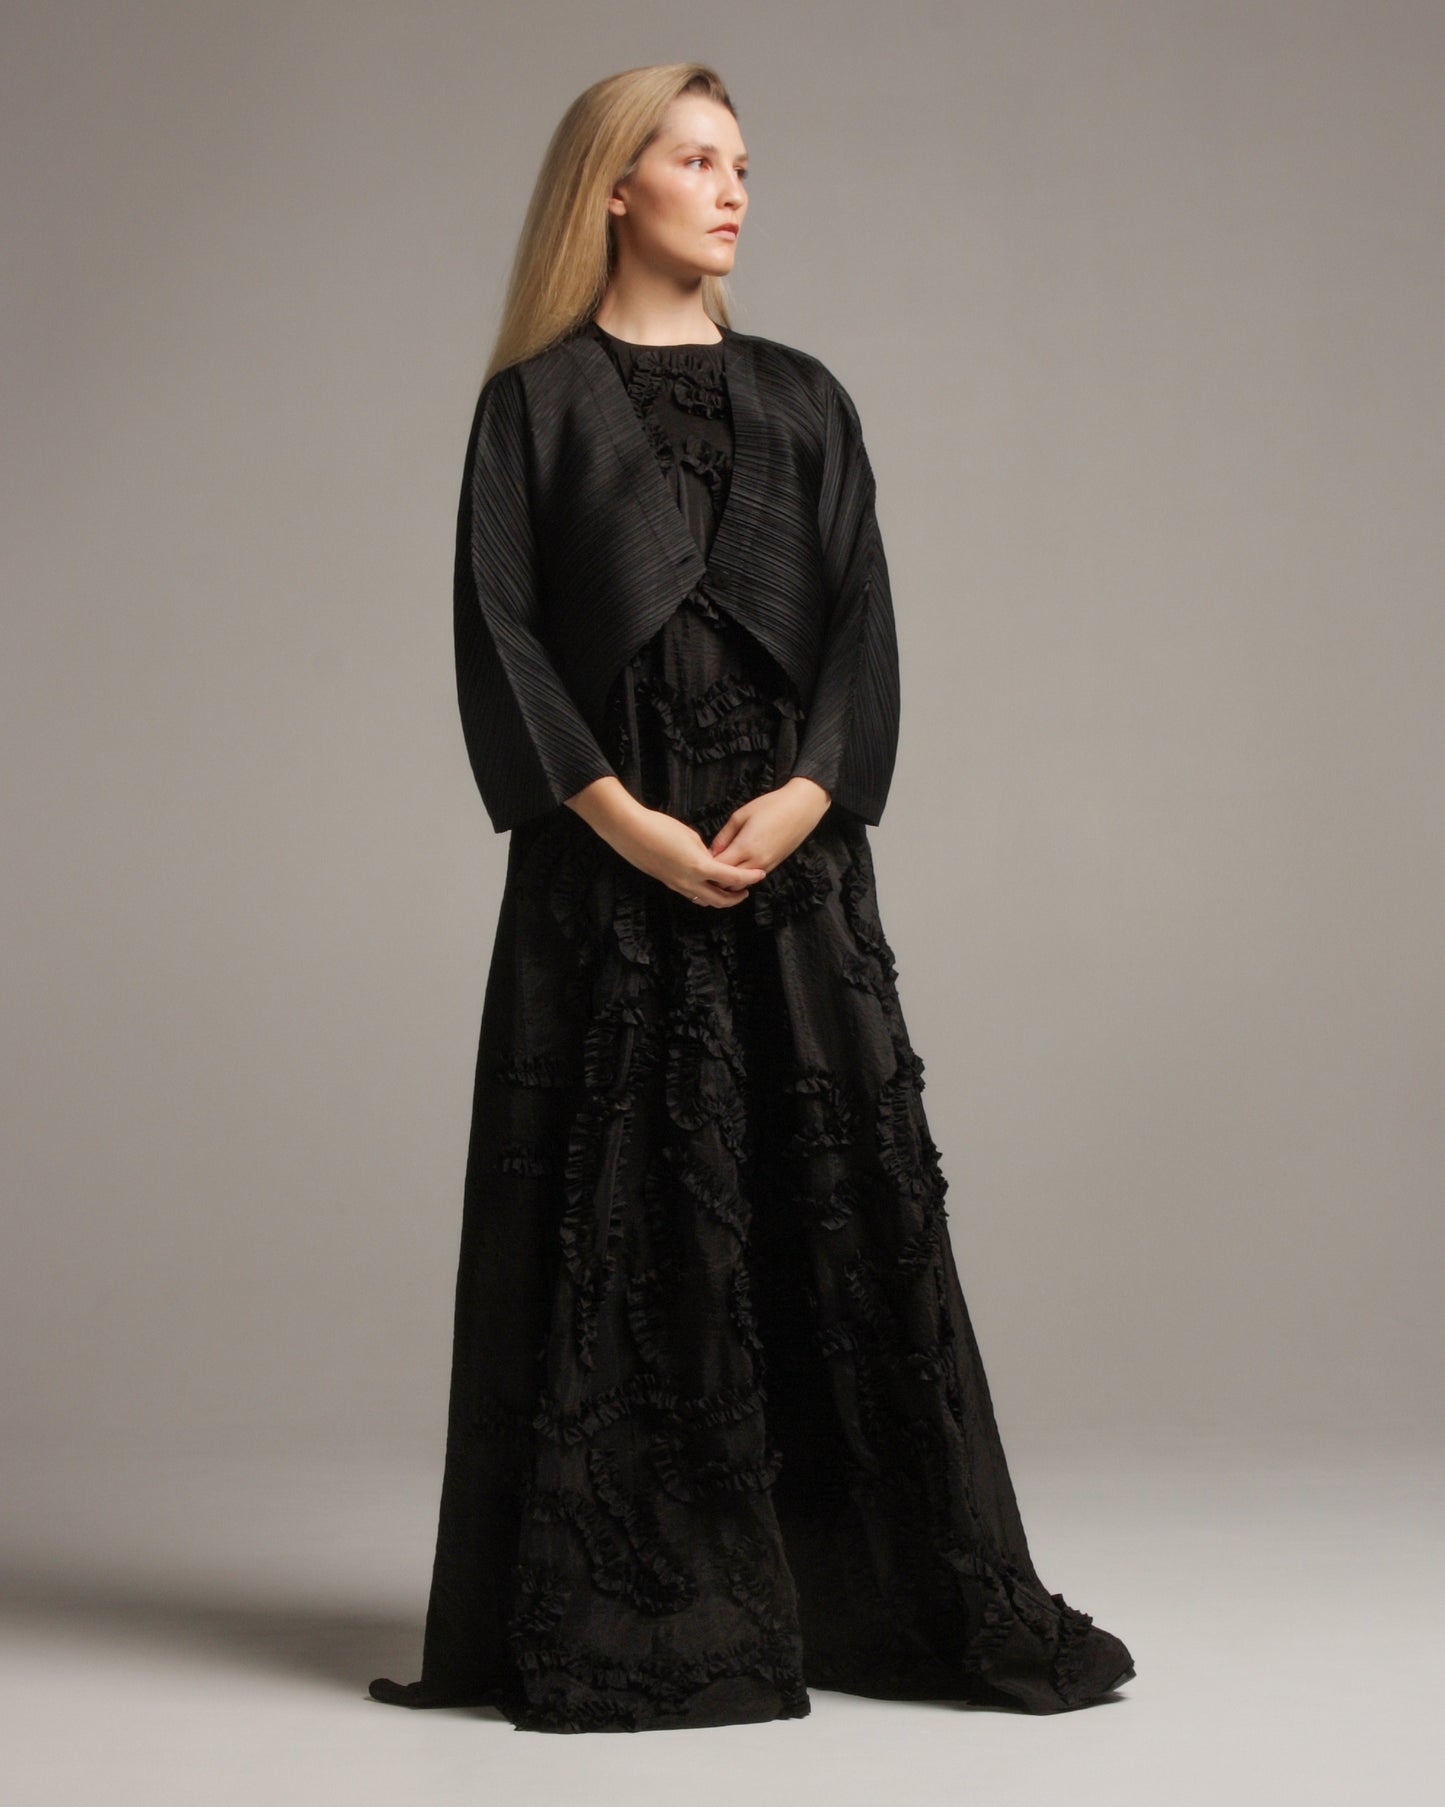 Dilania Black Sleeveless Dress